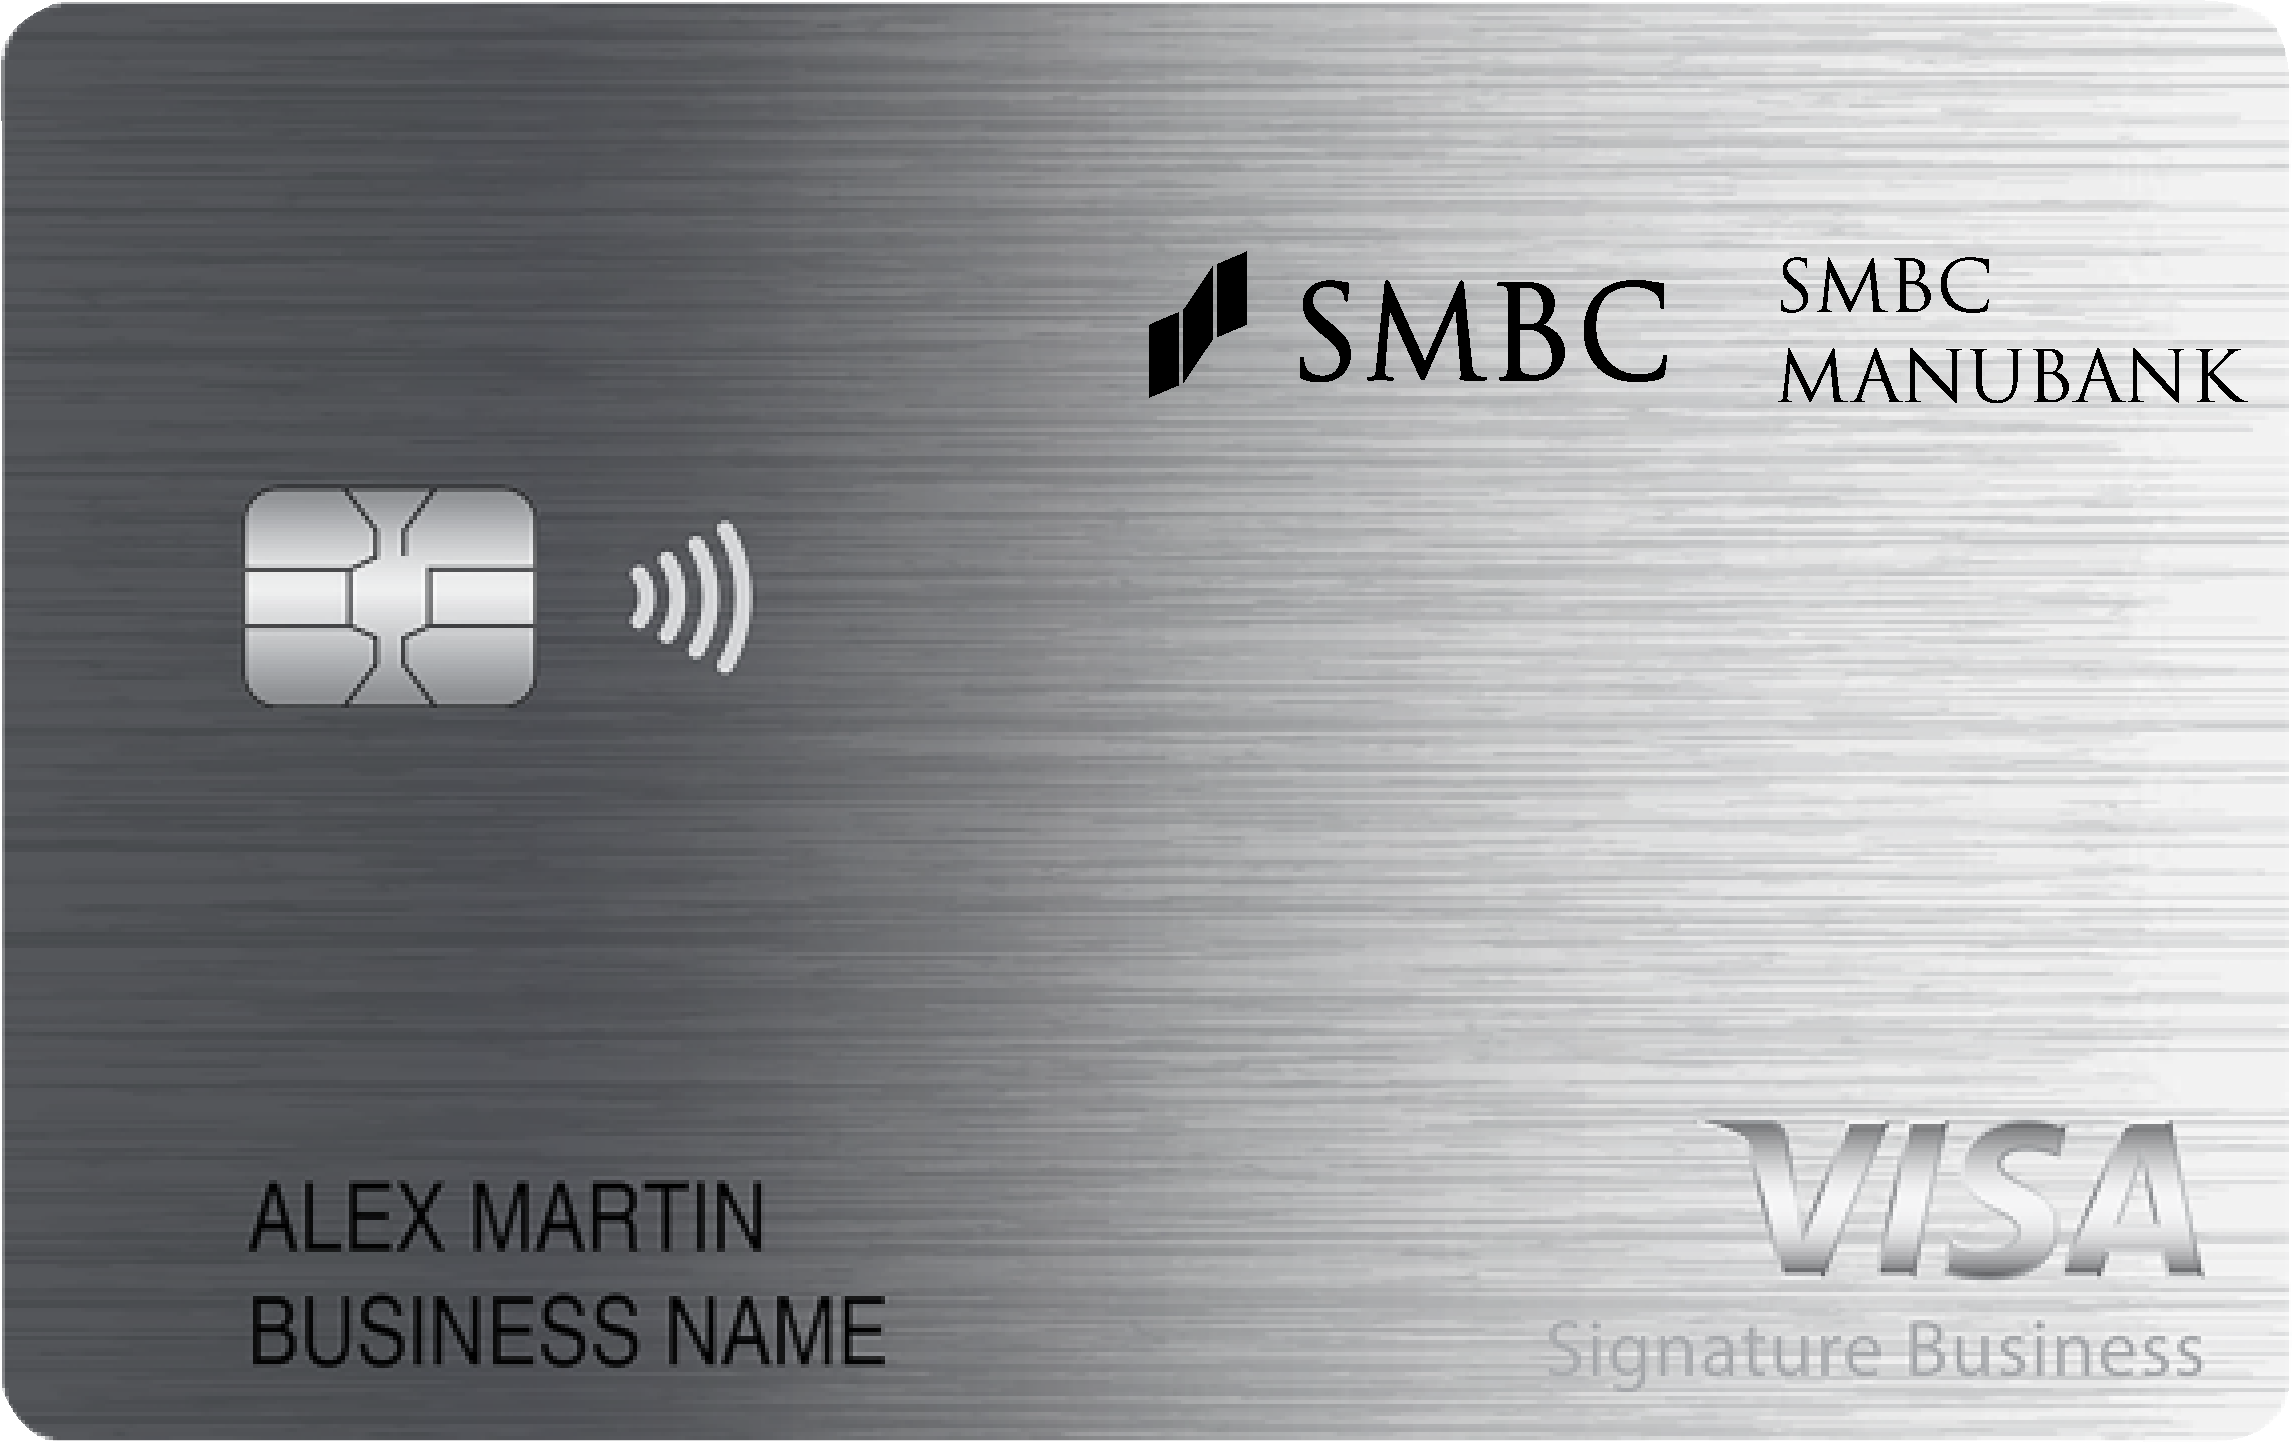 SMBC MANUBANK Smart Business Rewards Card